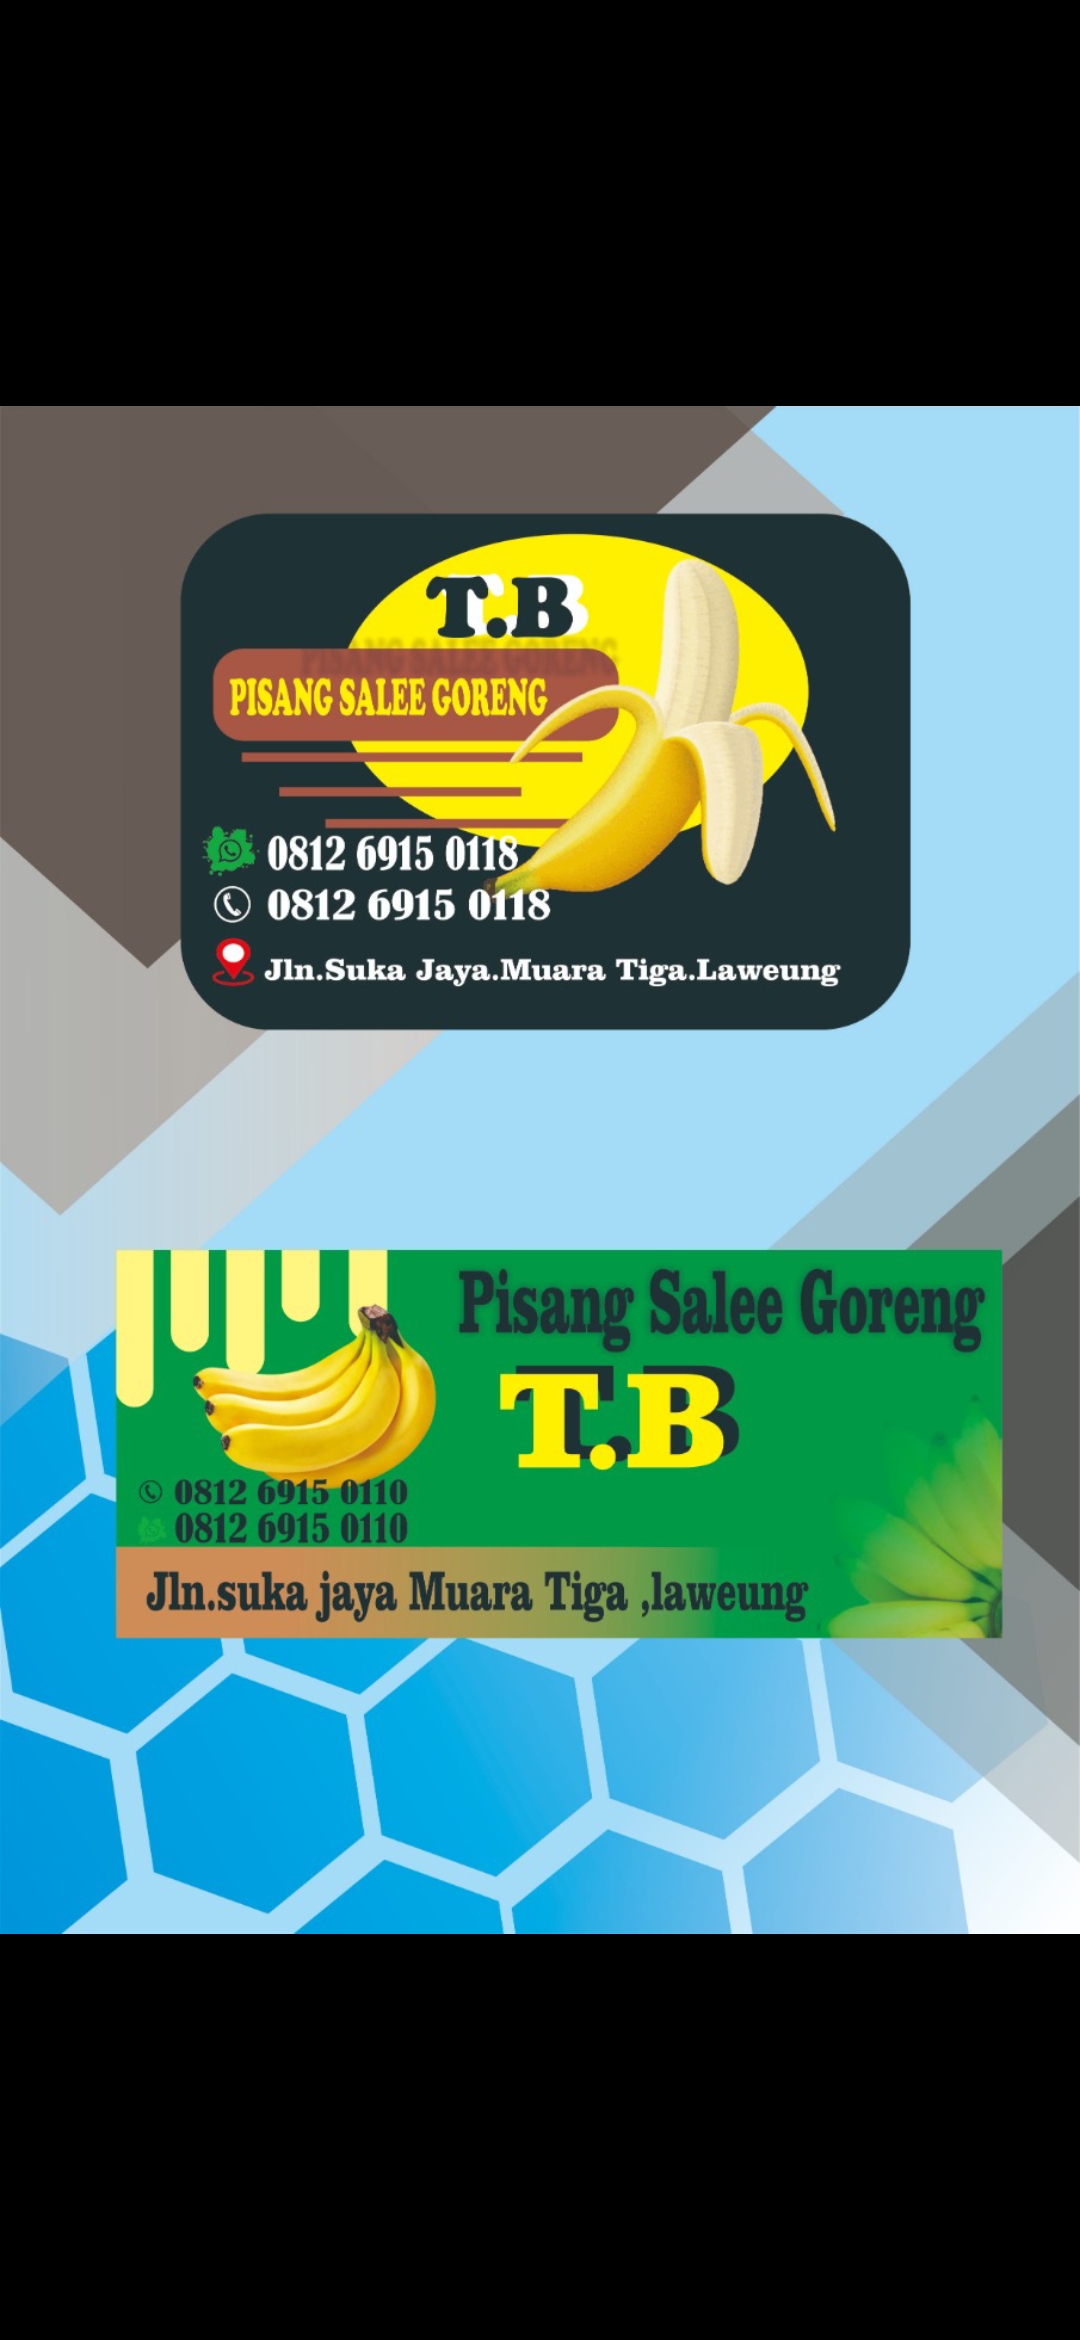 Contoh banner pisang sale goreng  yusnitech